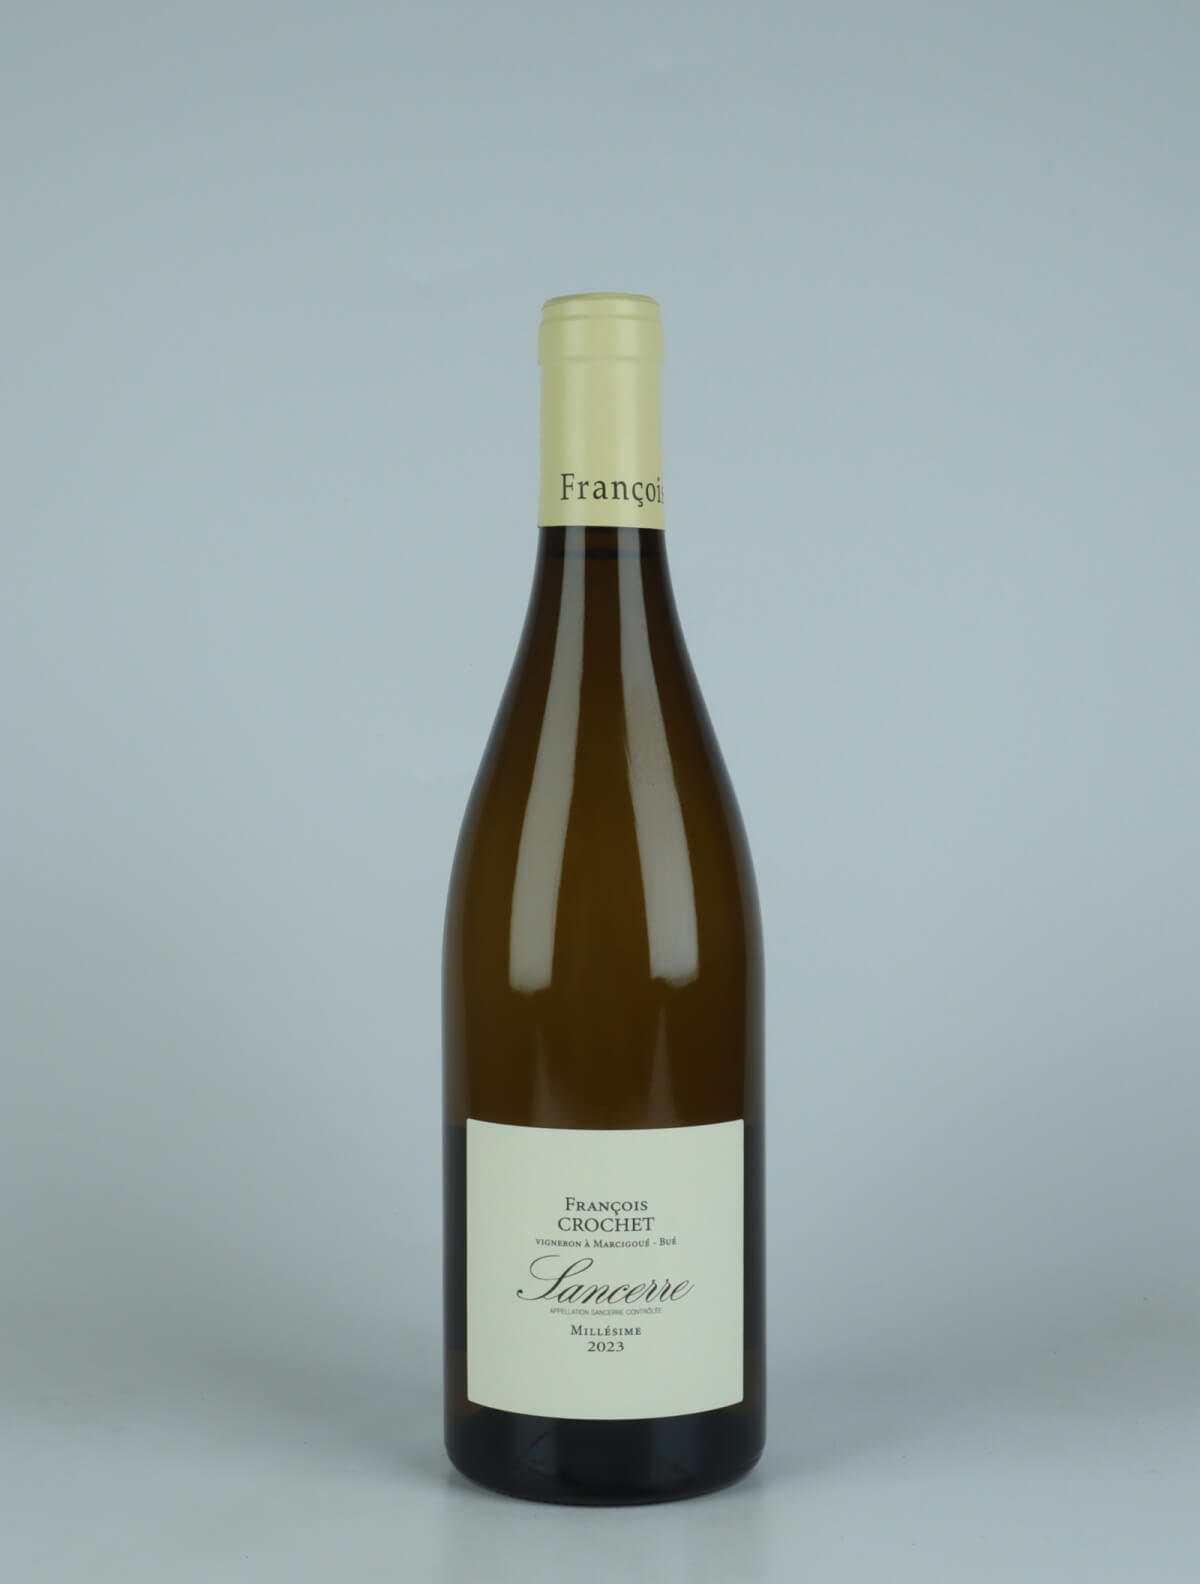 A bottle 2023 Sancerre Blanc White wine from François Crochet, Loire in France